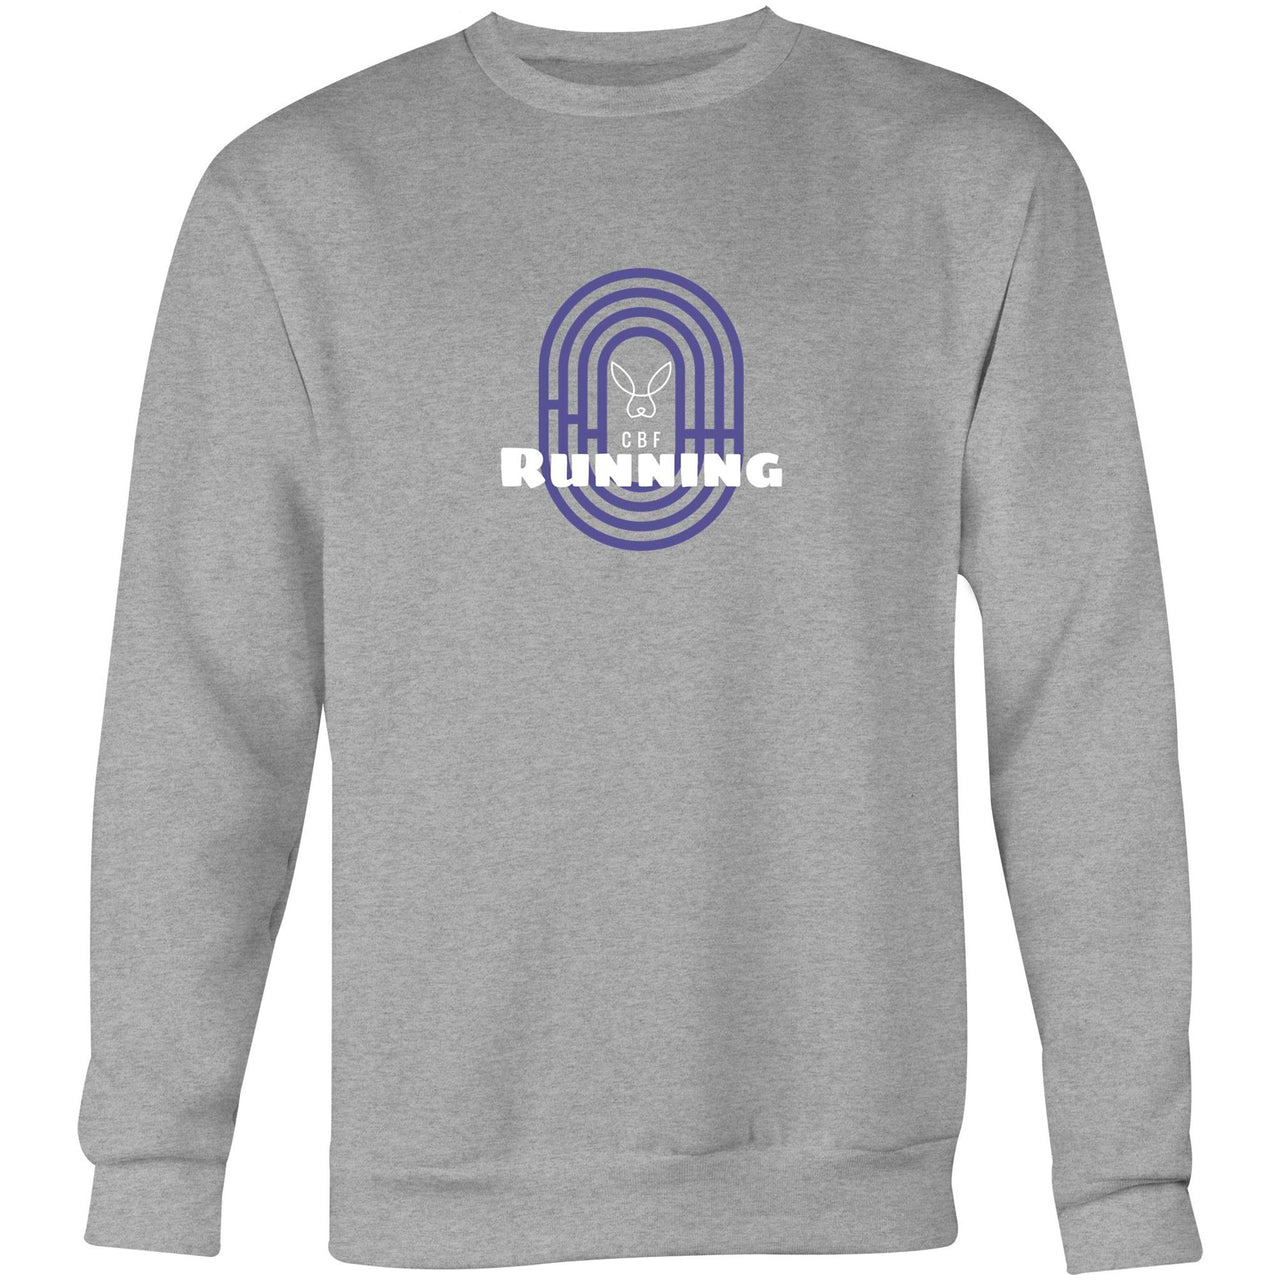 CBF Running Crew Sweatshirt Grey Marle by CBF Clothing